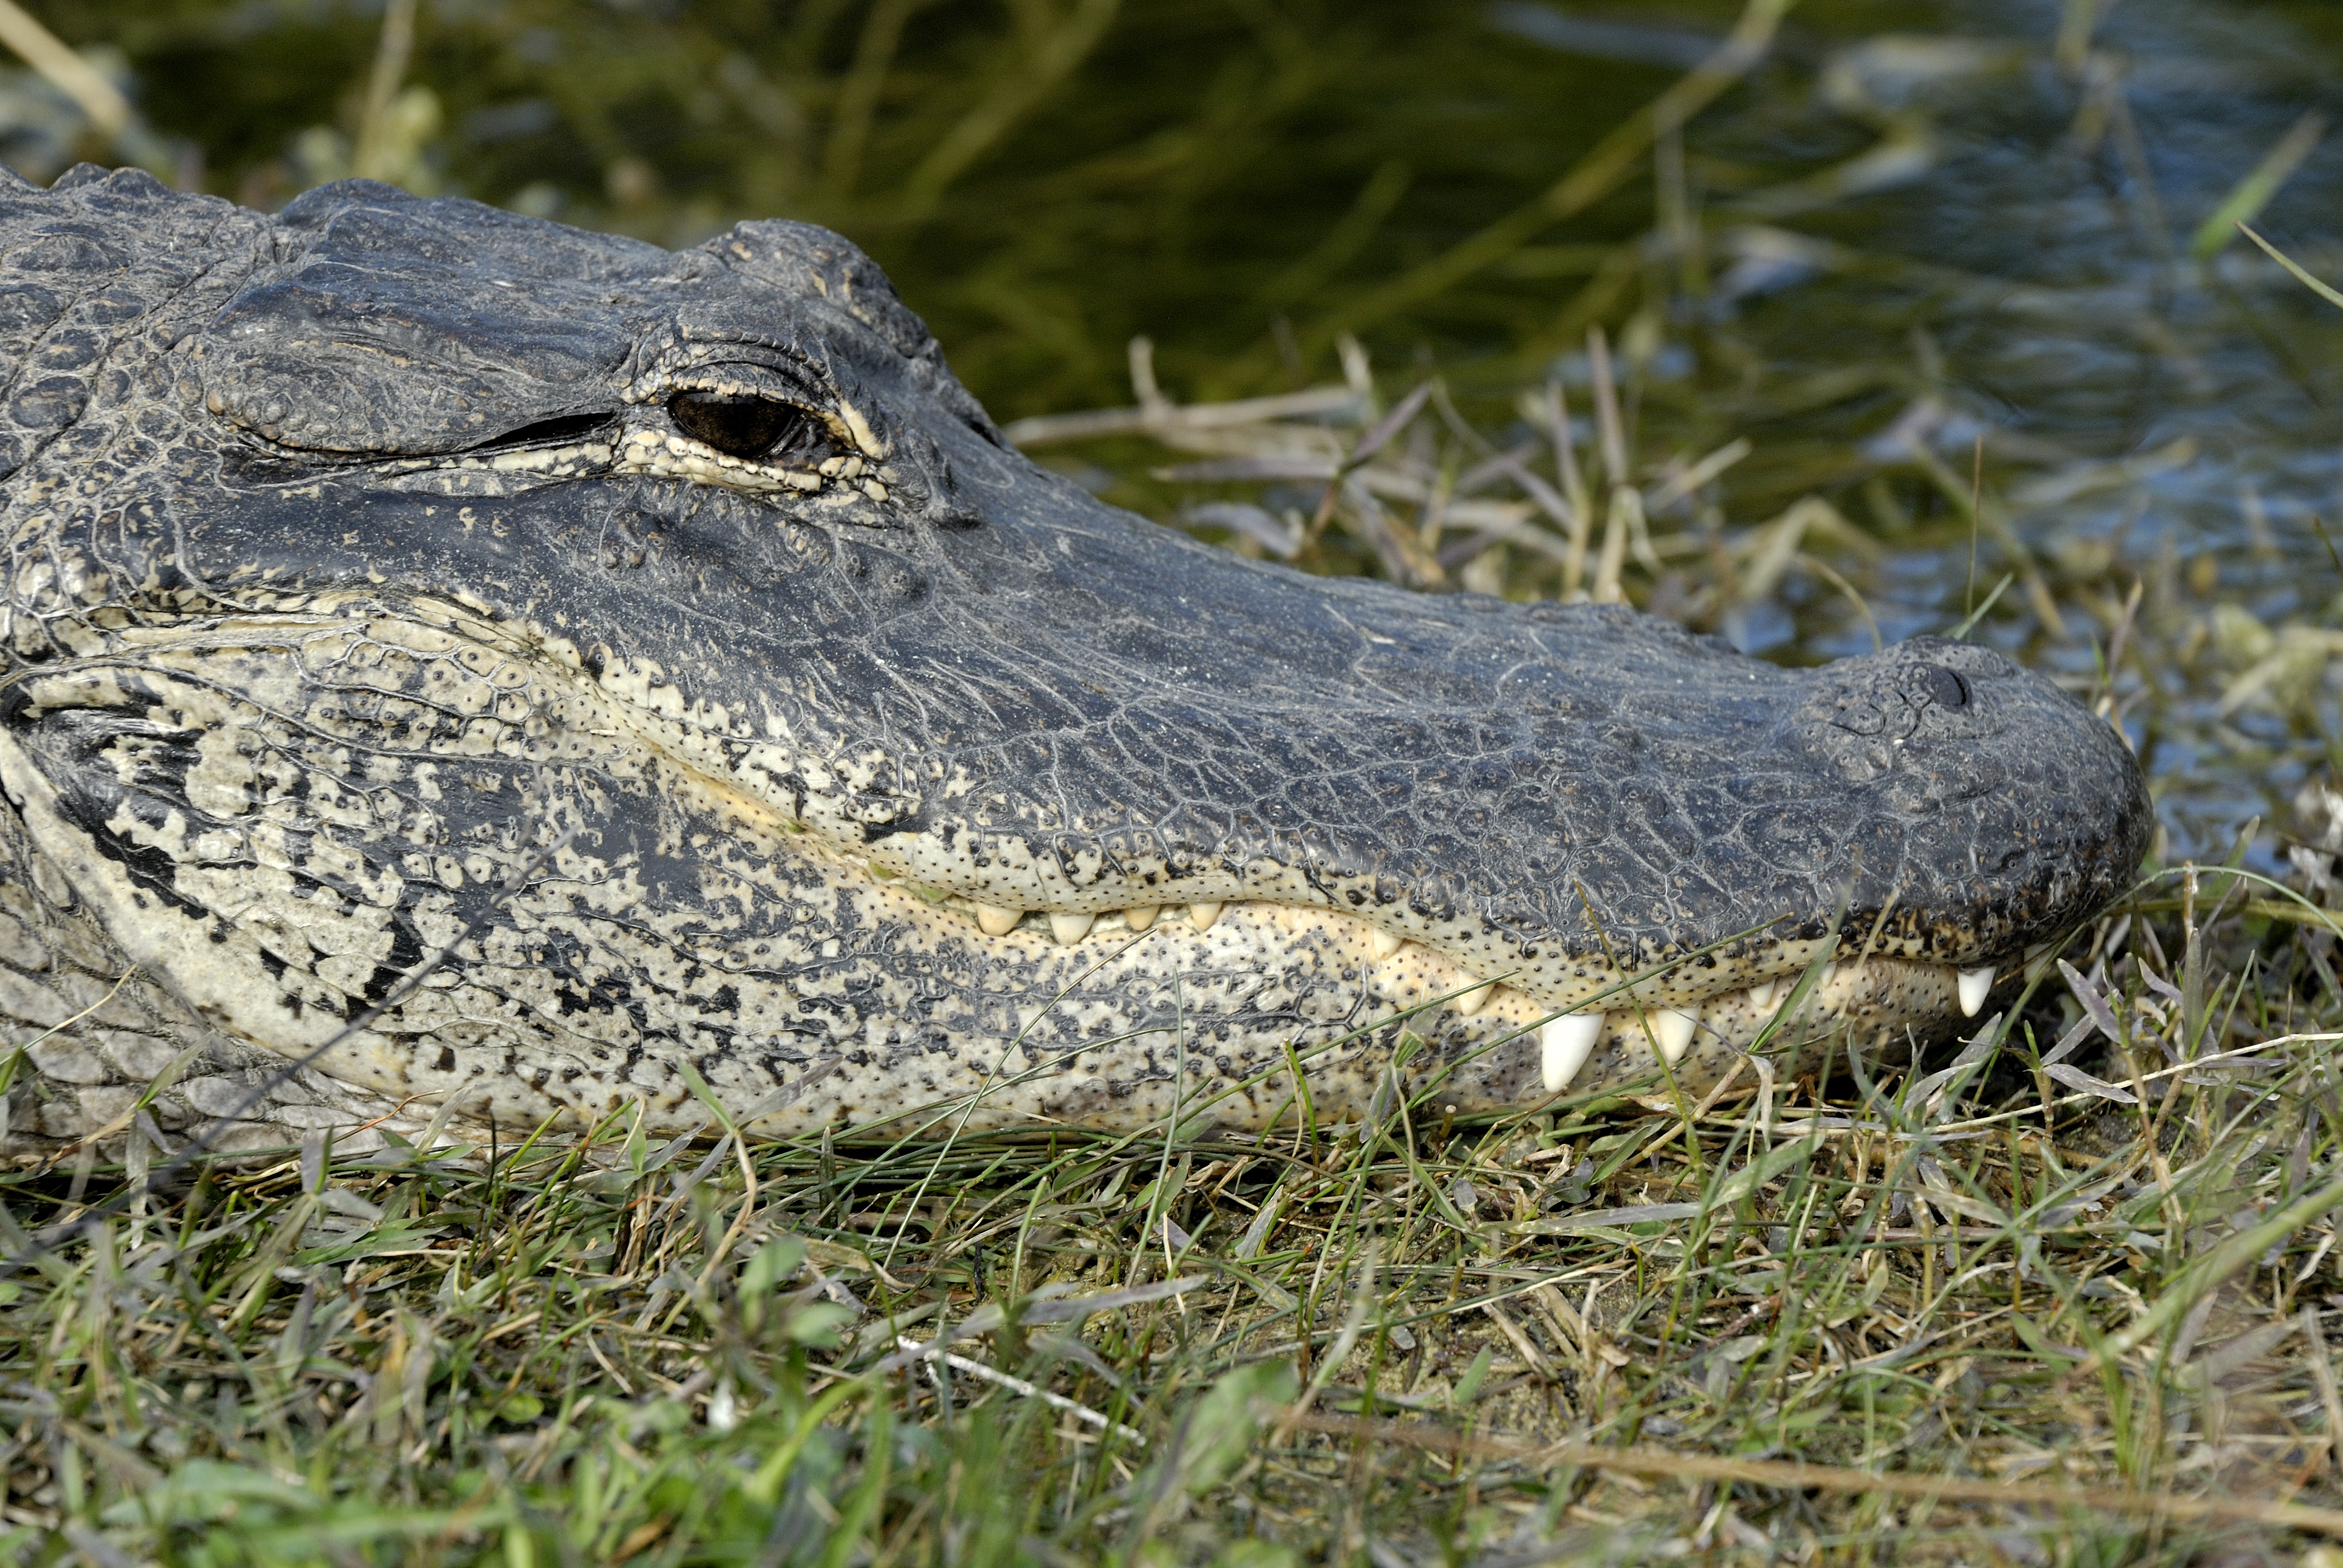 File:Alligator mississippiensis, Florida.jpg - Wikimedia Commons